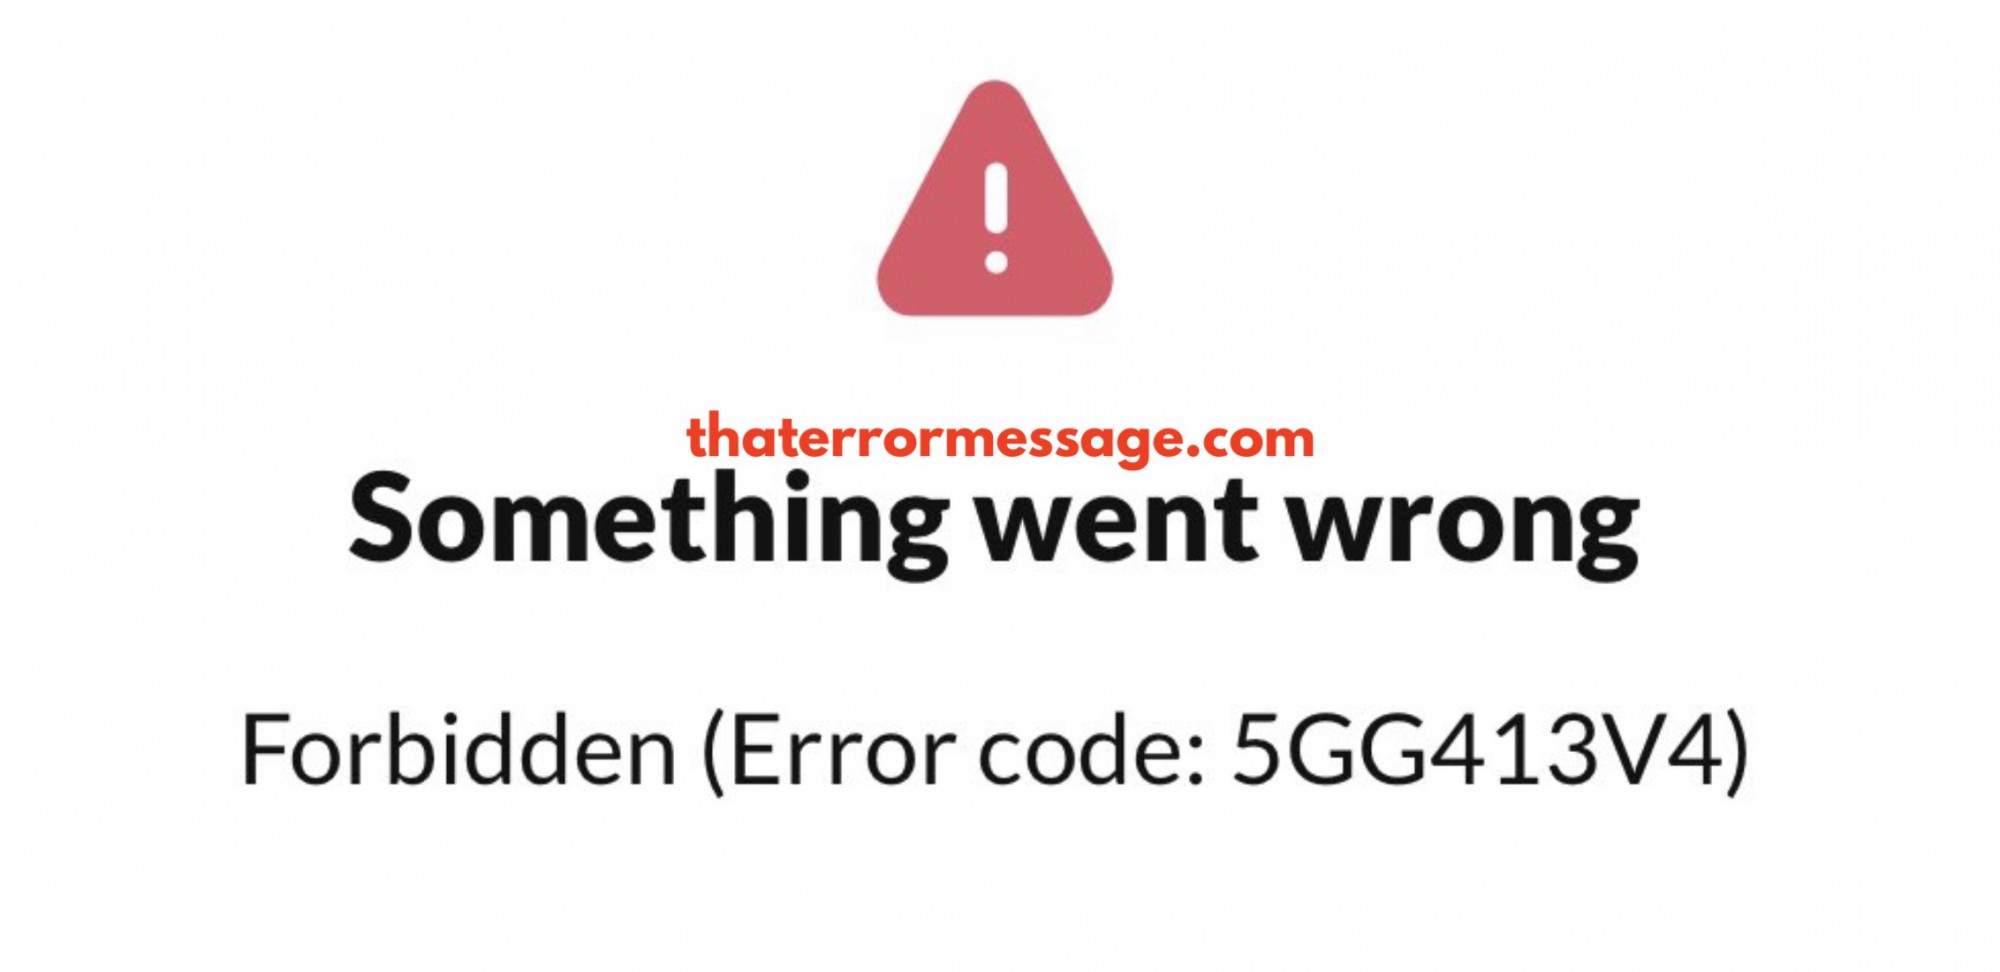 Forbidden Error Code 5gg413v4 Offerup